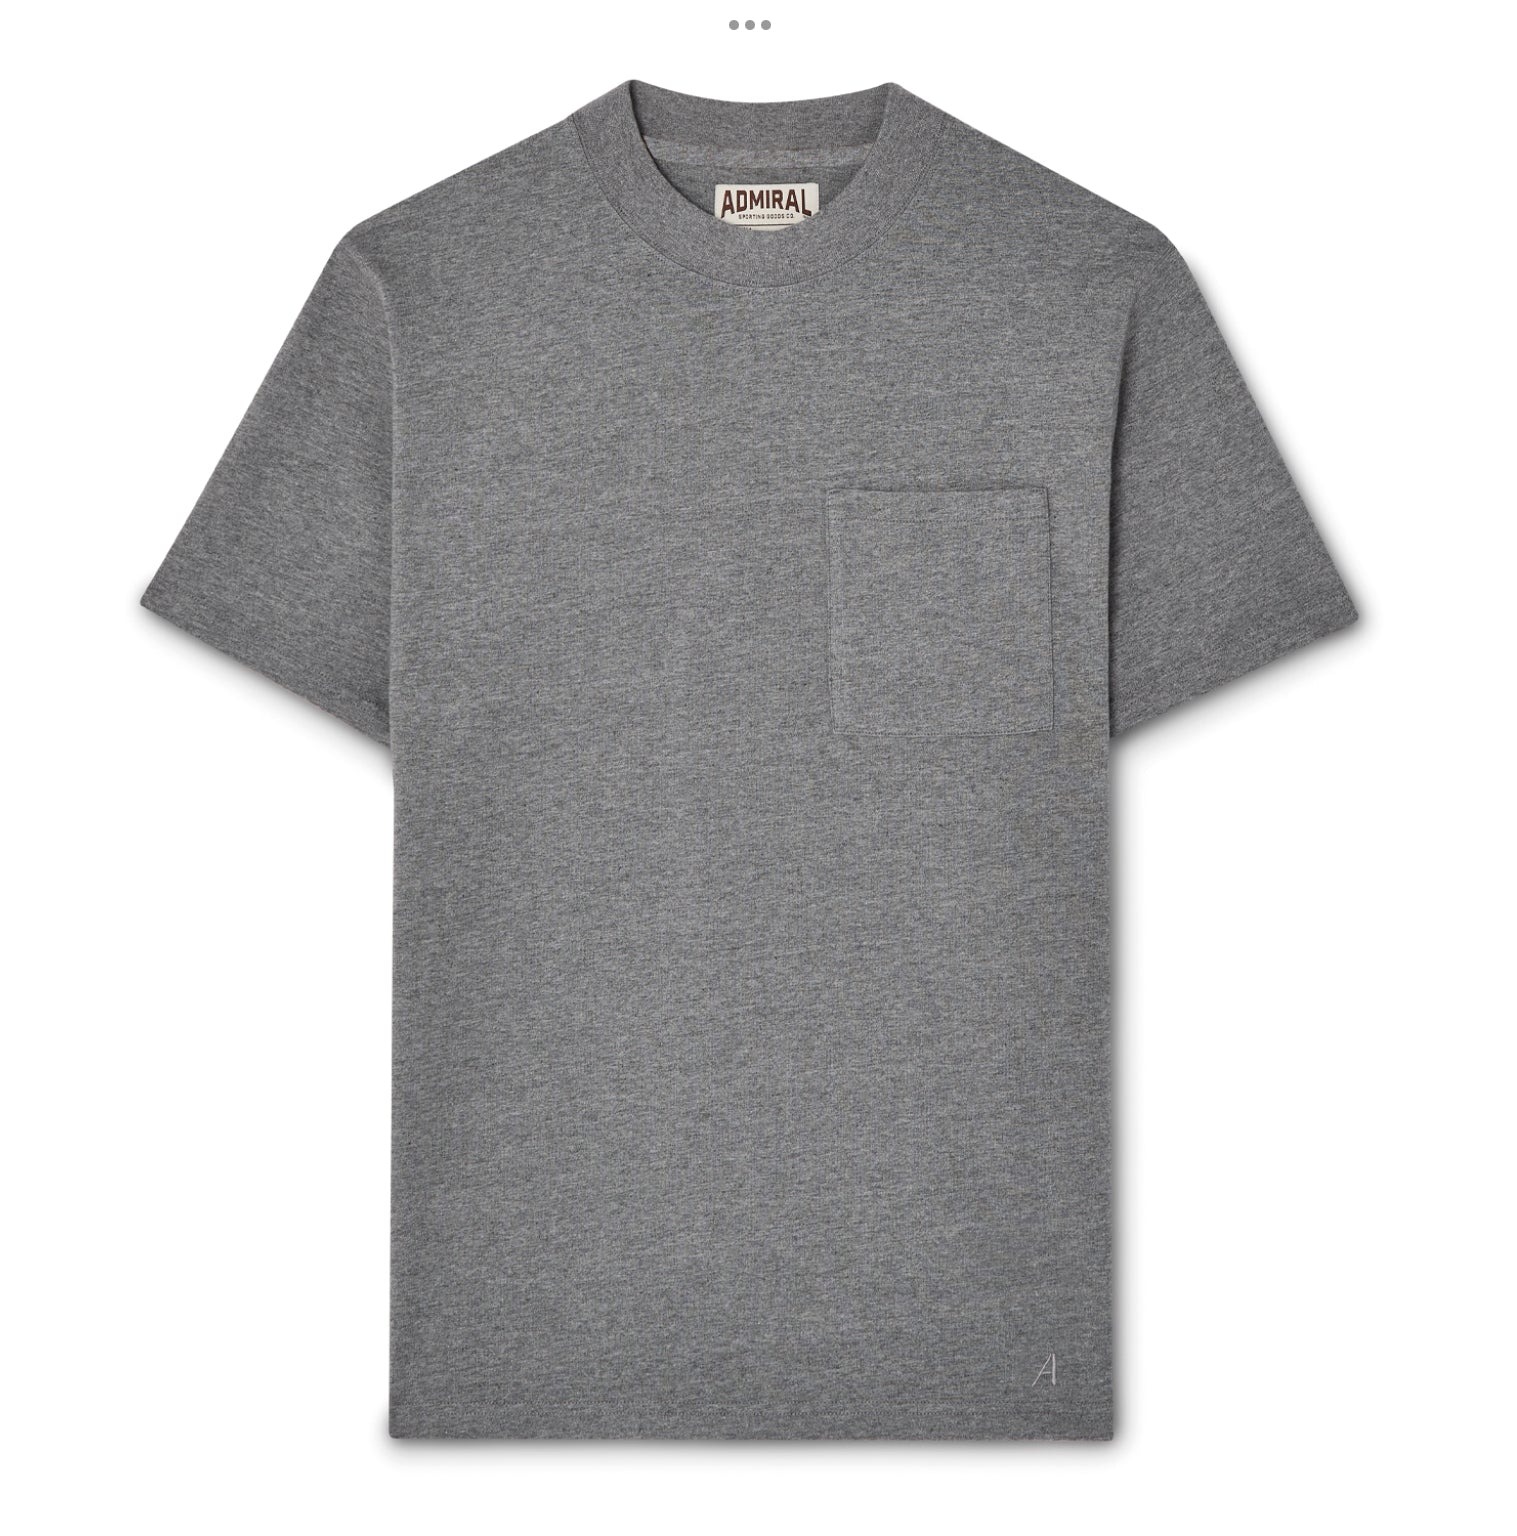 Admiral Sporting Goods Eastleigh Condor Grey T-shirt